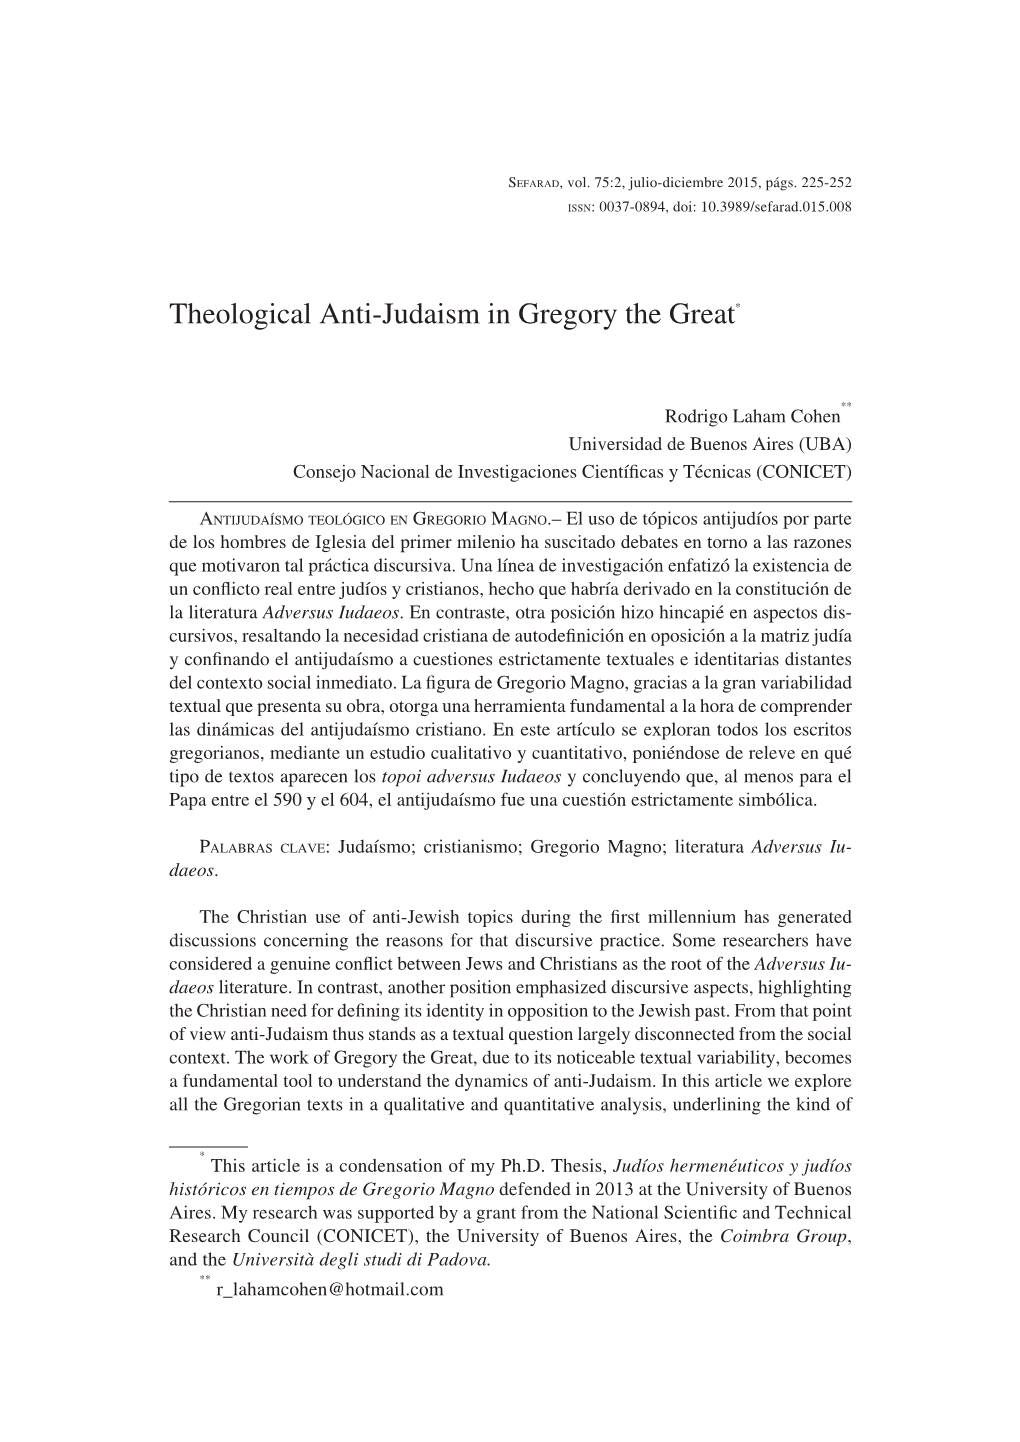 Theological Anti-Judaism in Gregory the Great Rodrigo Laham